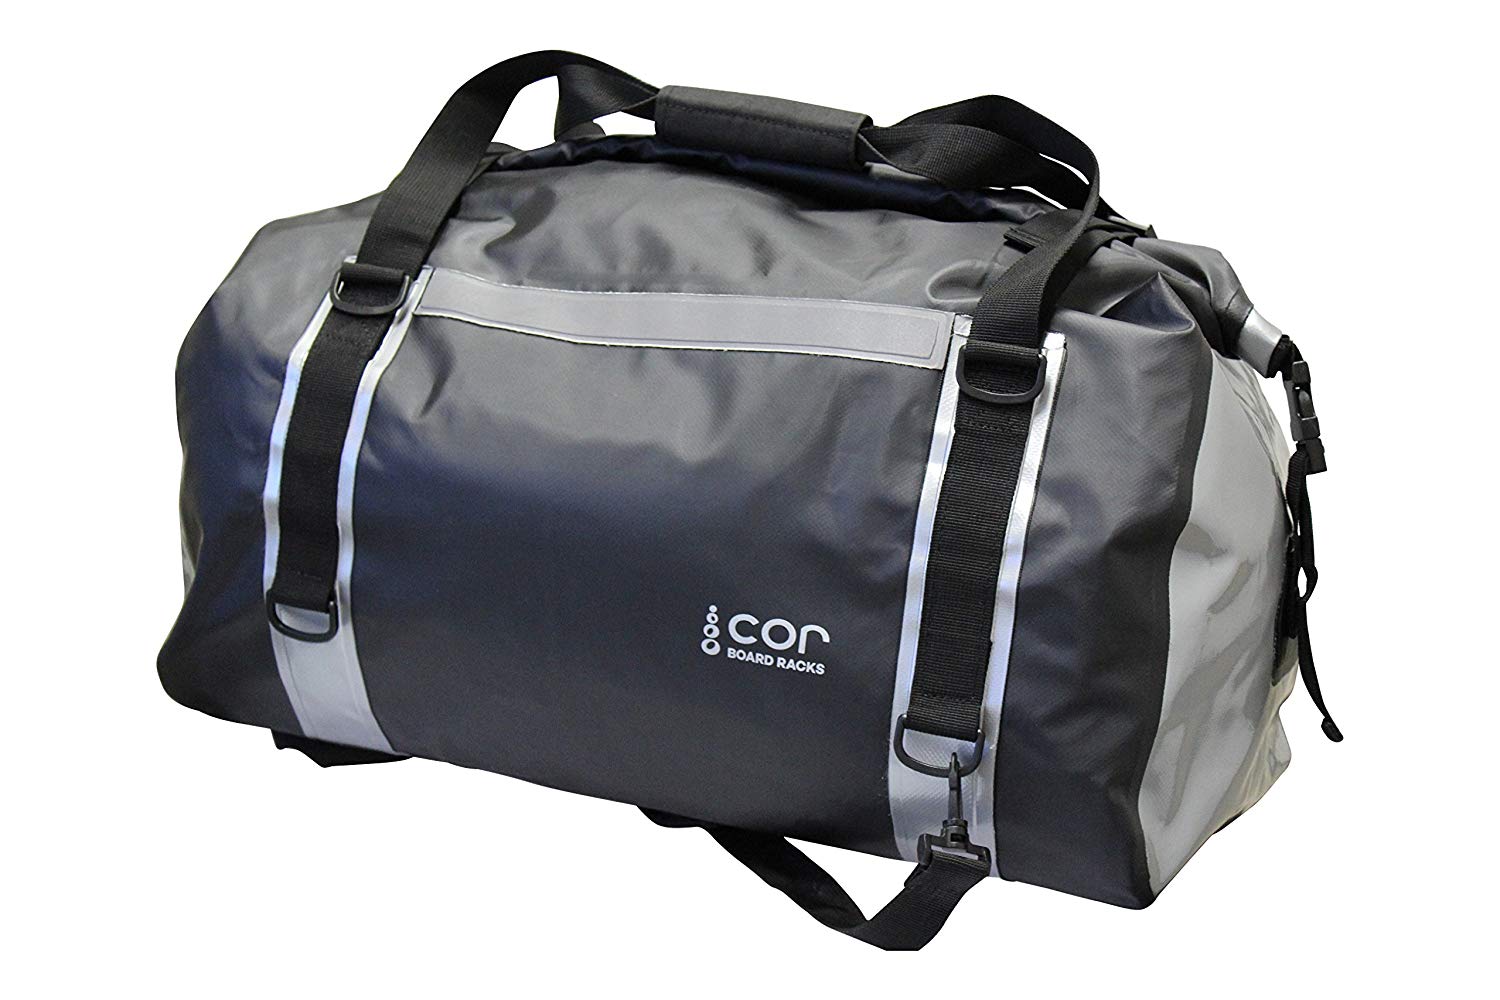 COR Surf Waterproof Lightweight Duffle Bag 60l Travel Bag Water Resistant Pocket - image 2 of 6